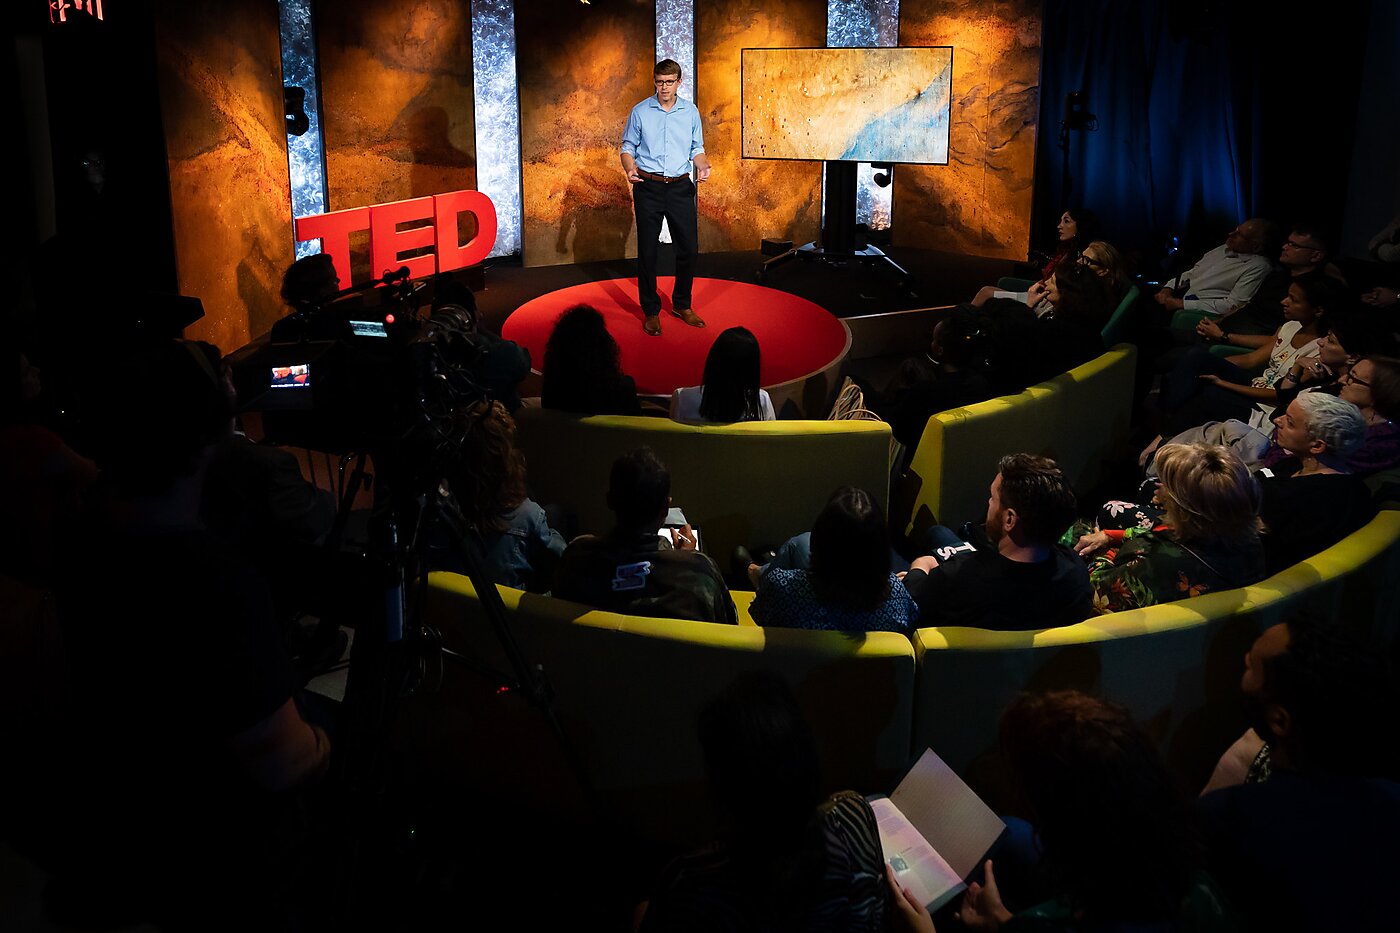 David Bier speaks on immigration at TED event